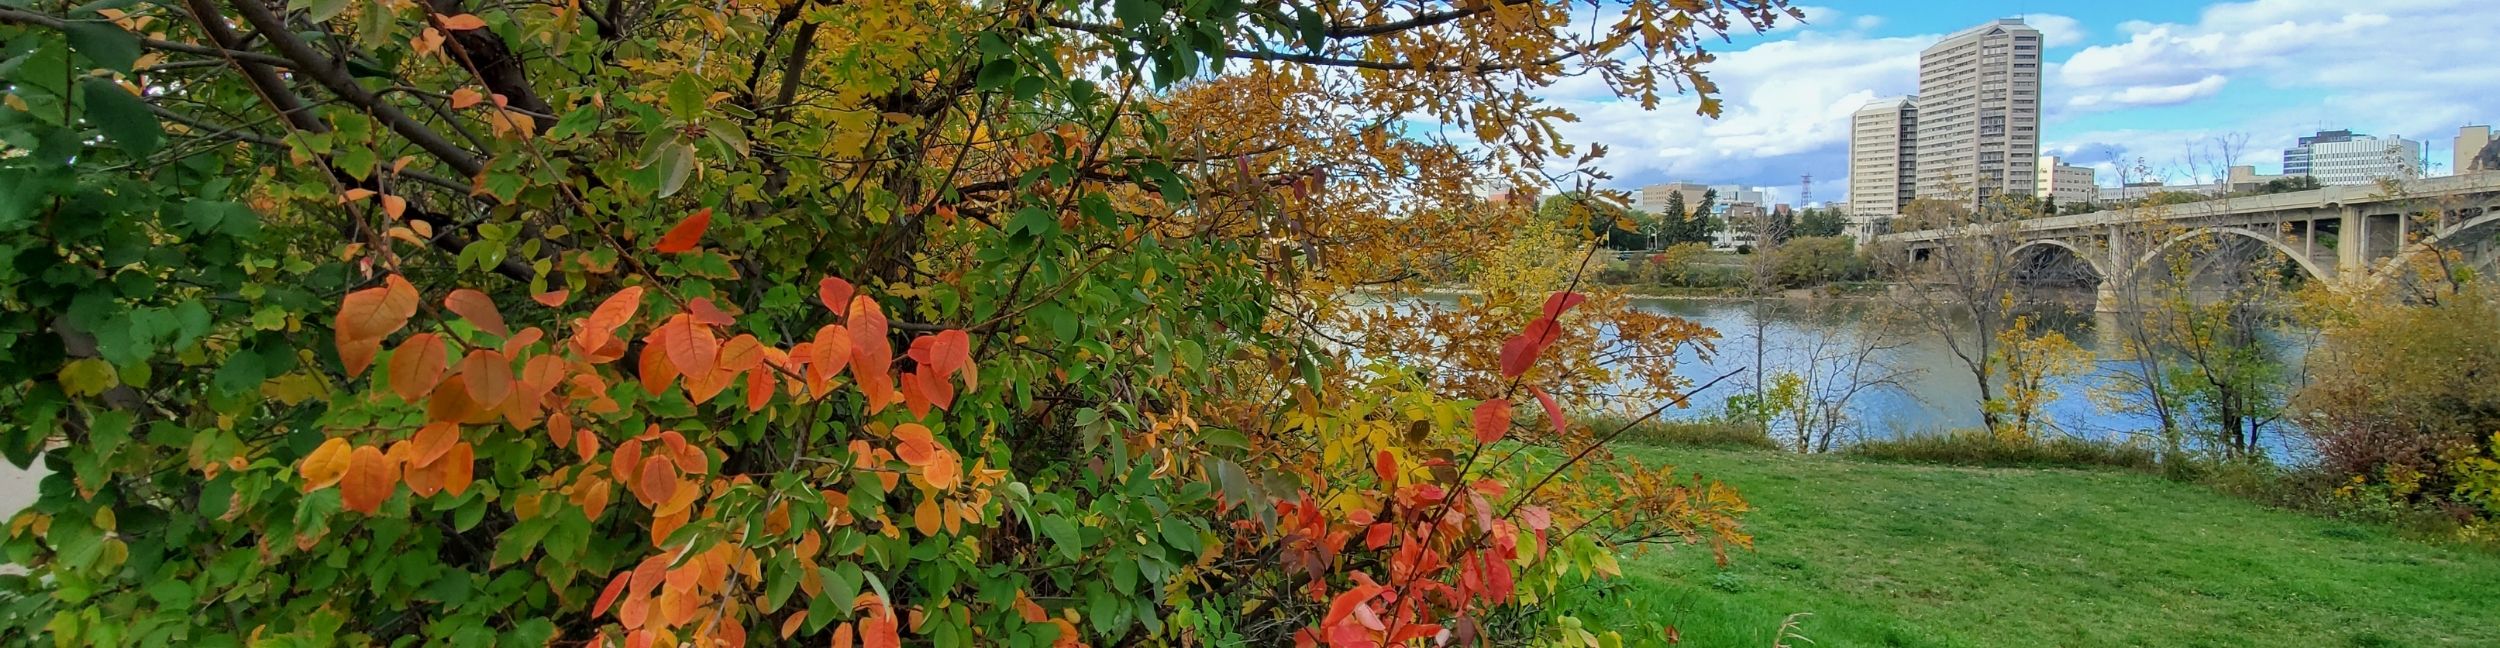 Fall comes to the Meewasin Valley Saskatoon